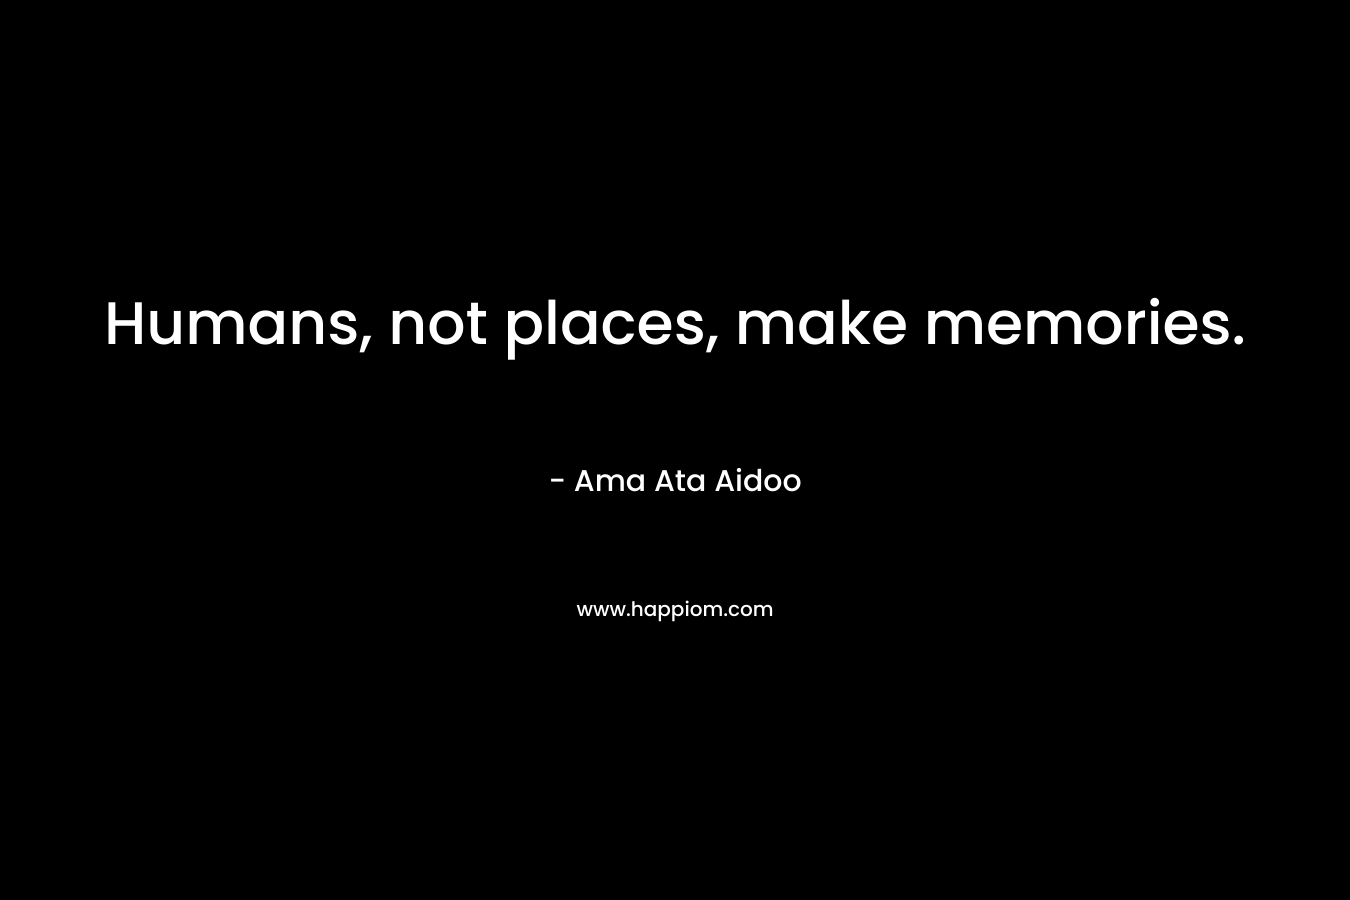 Humans, not places, make memories.